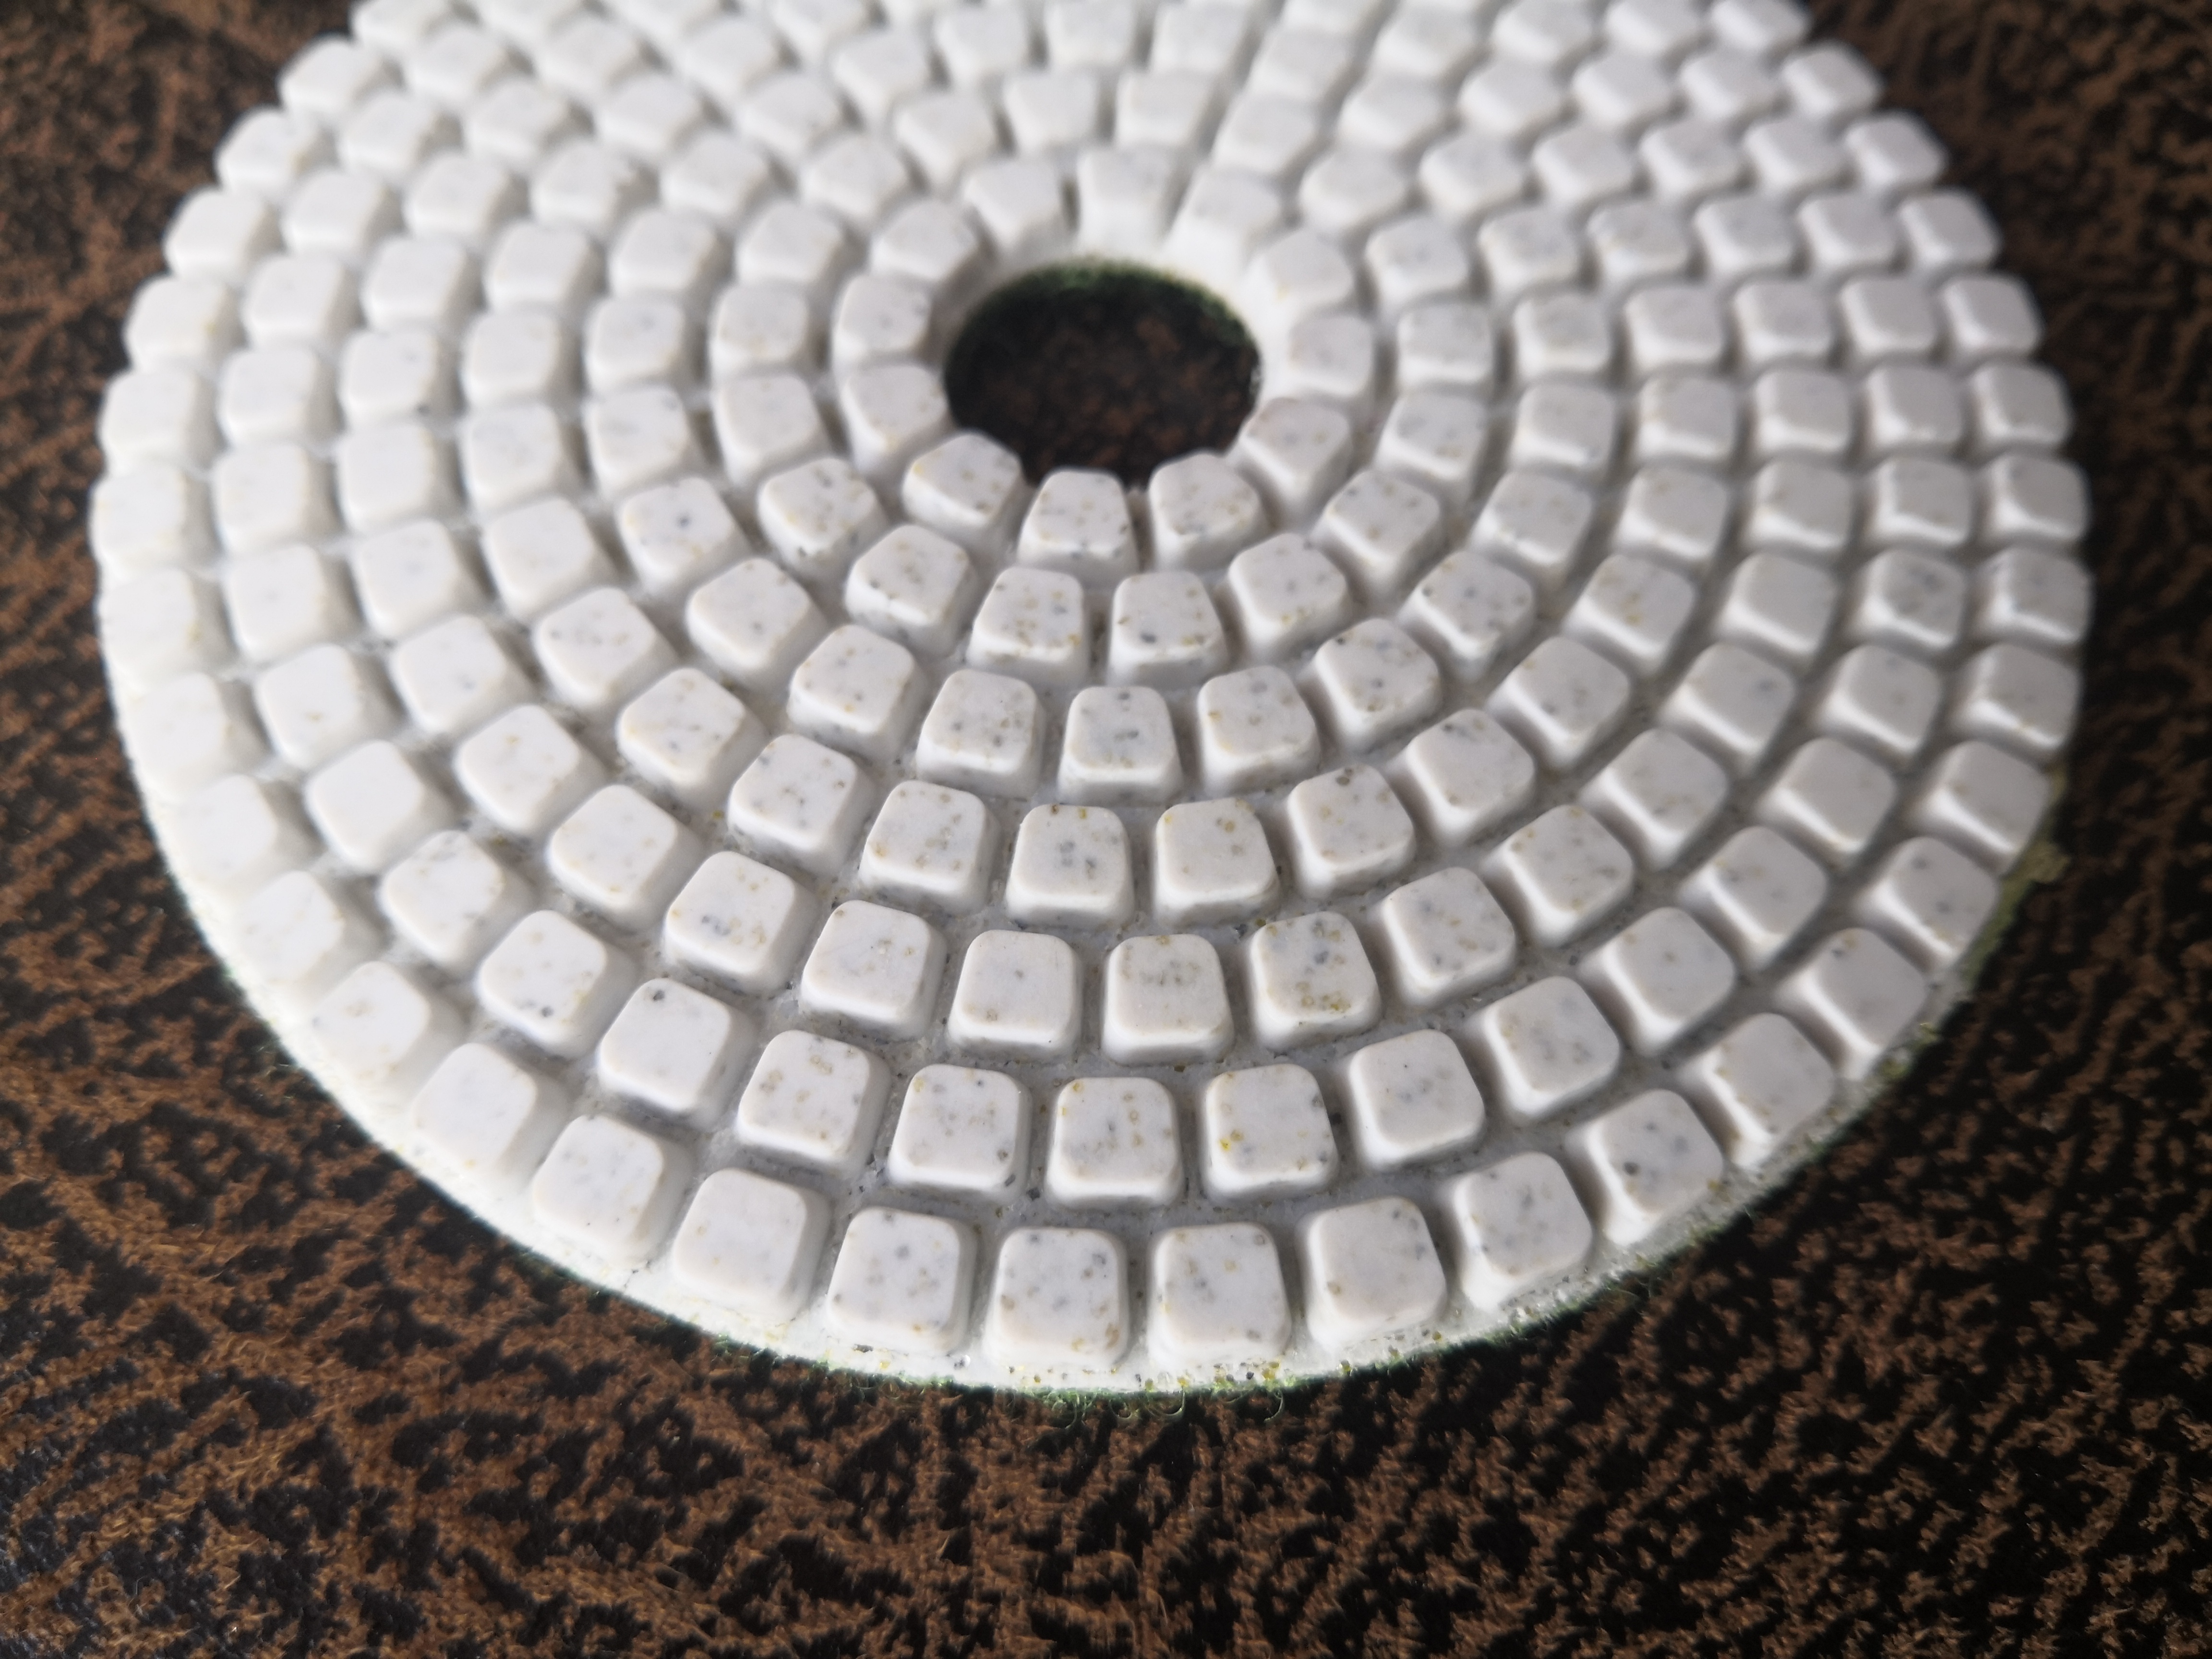 LITTLE ANT Best Seller Square Wet Polishing Pad 3" 4" 5“ 6” 8“ Inch Less Dust for Concrete Stone